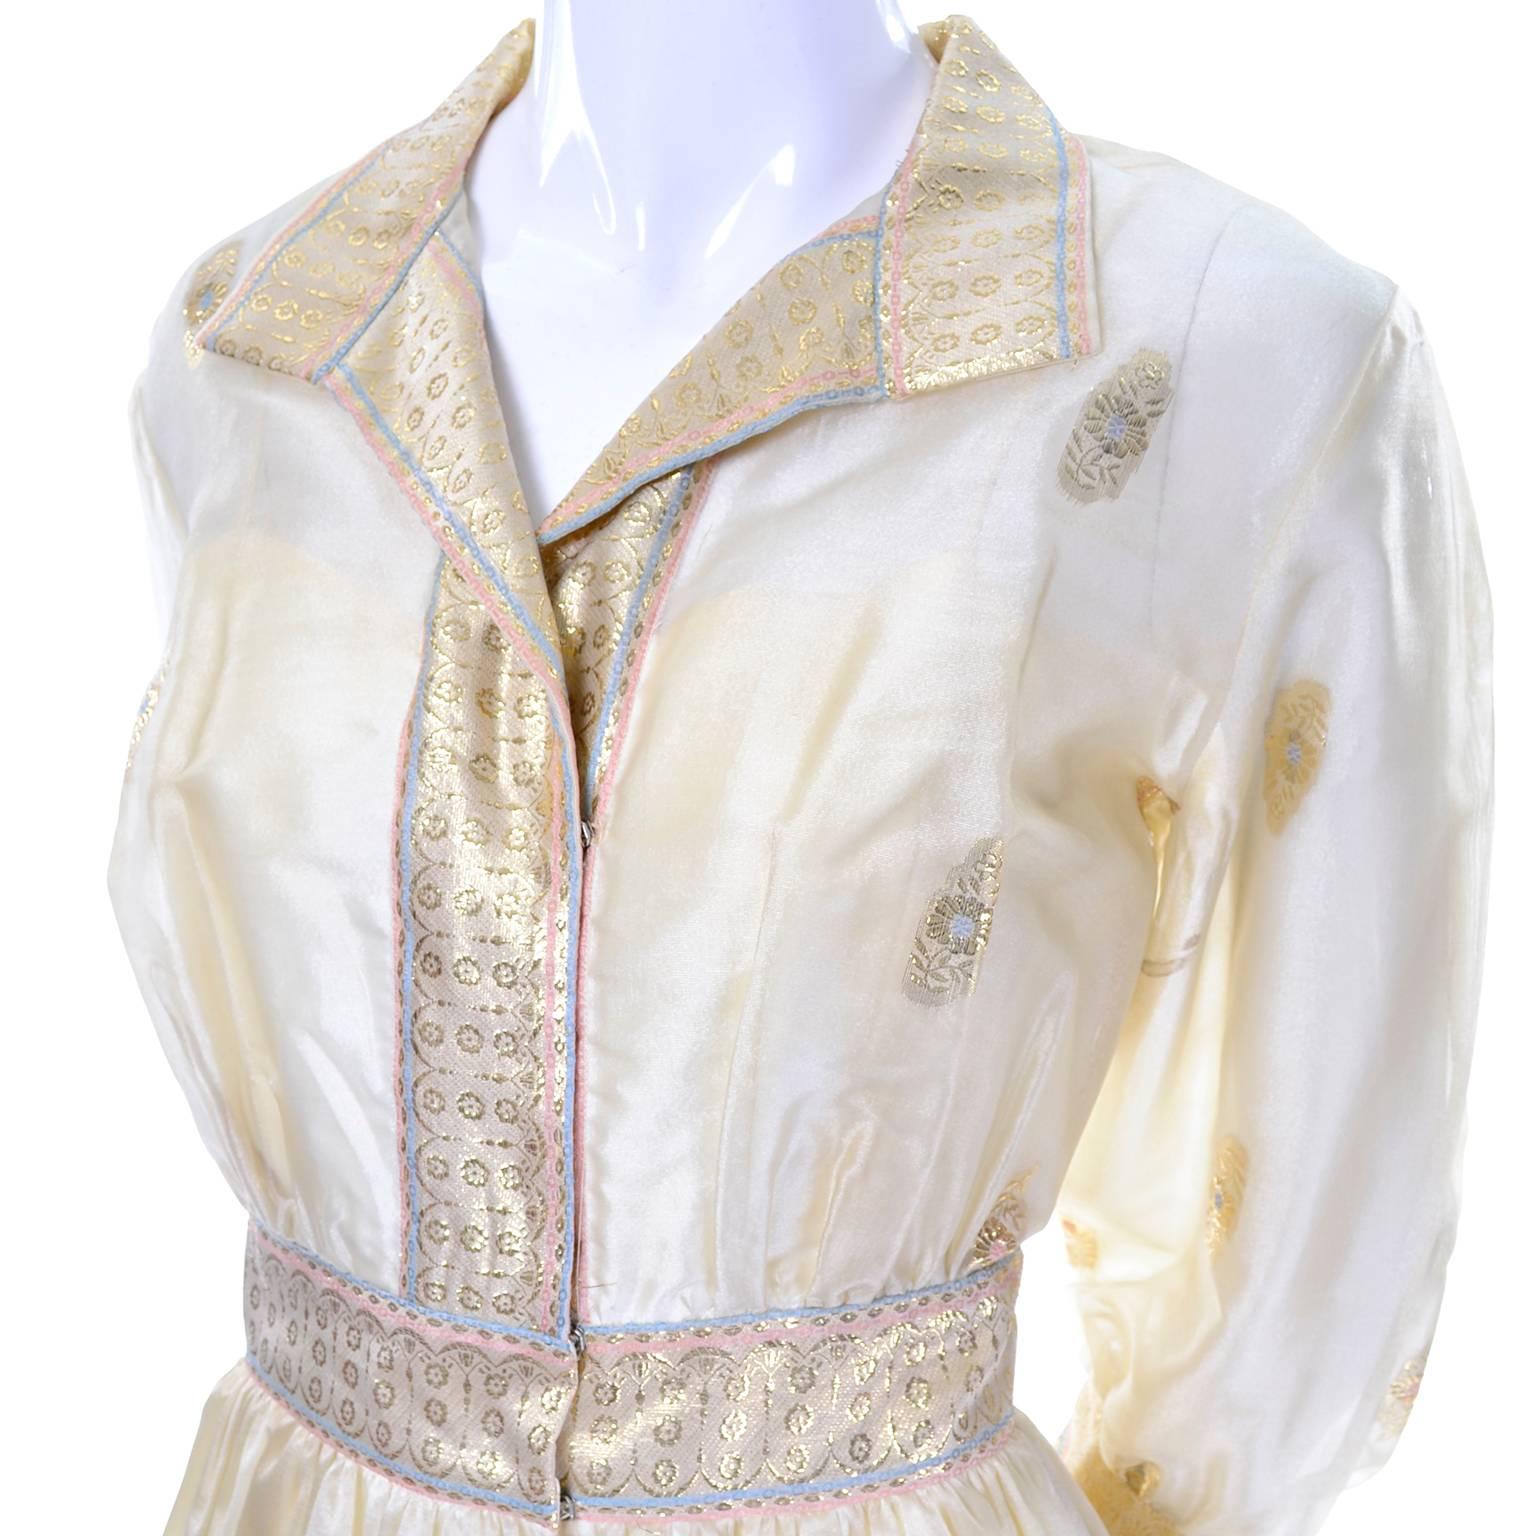 Women's 1960s Vintage Dress Soft Gold Metallic Gold Embroidery Ethnic Sari Inspired